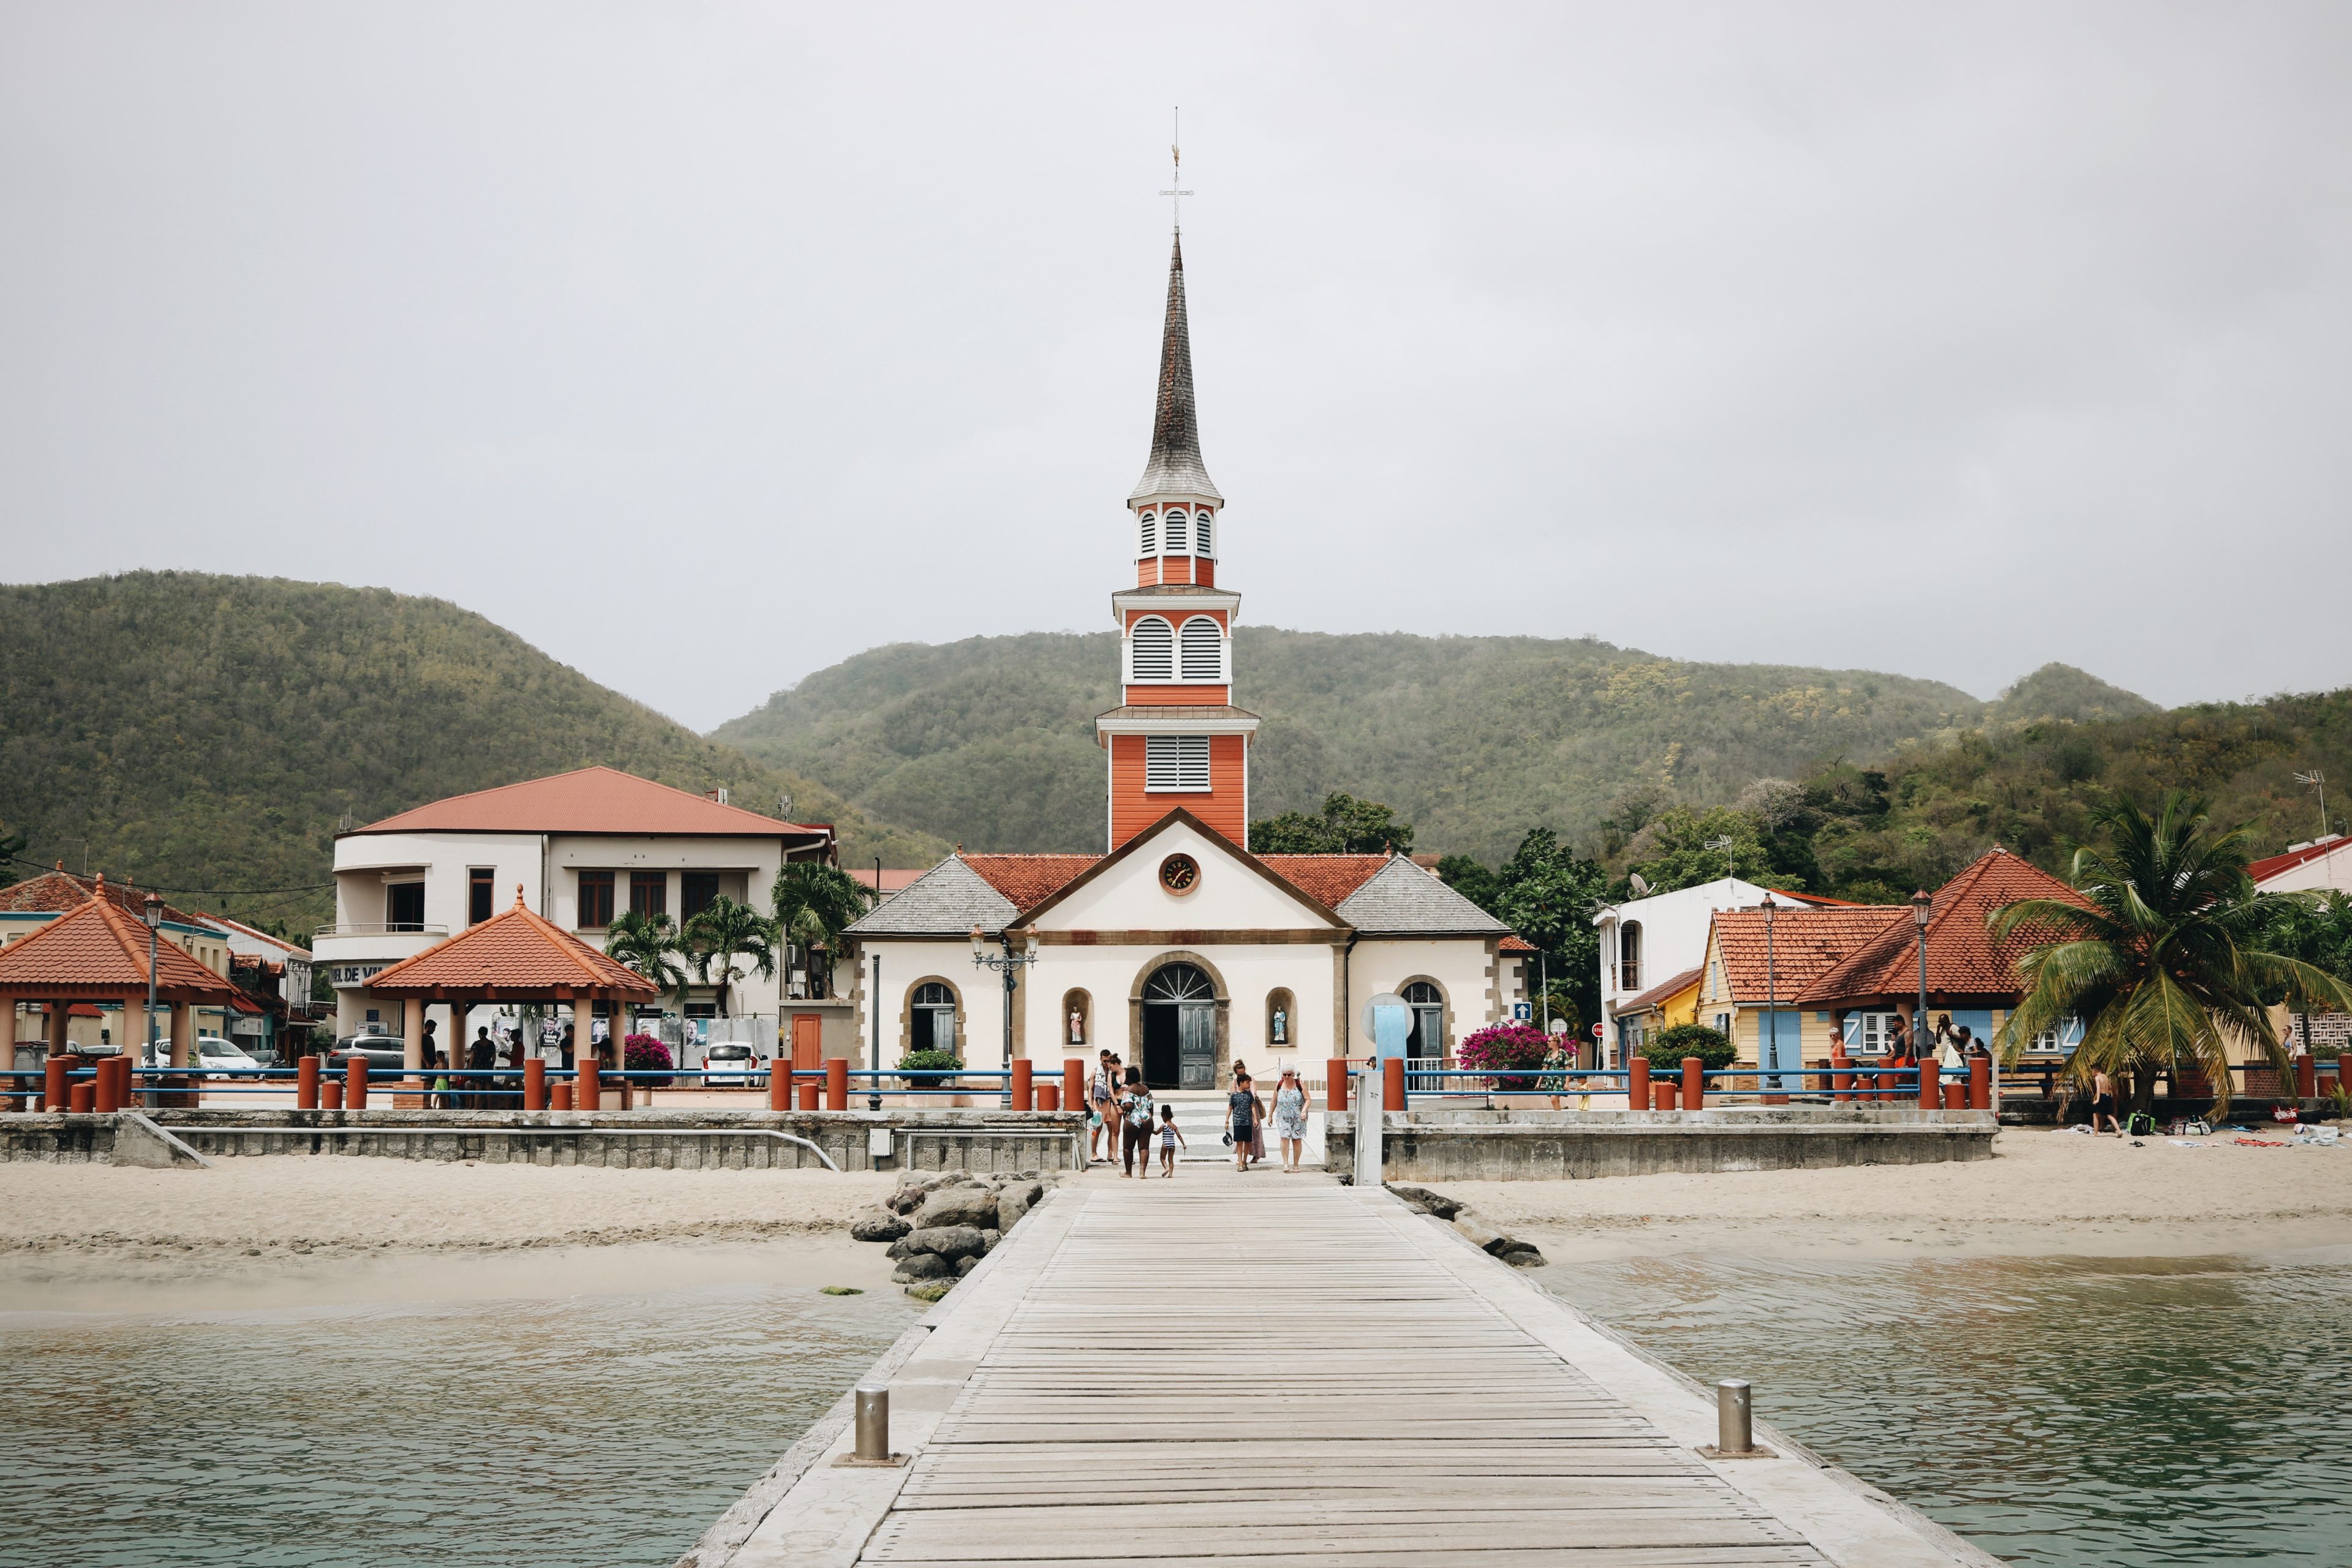 Blog voyage Martinique en famille